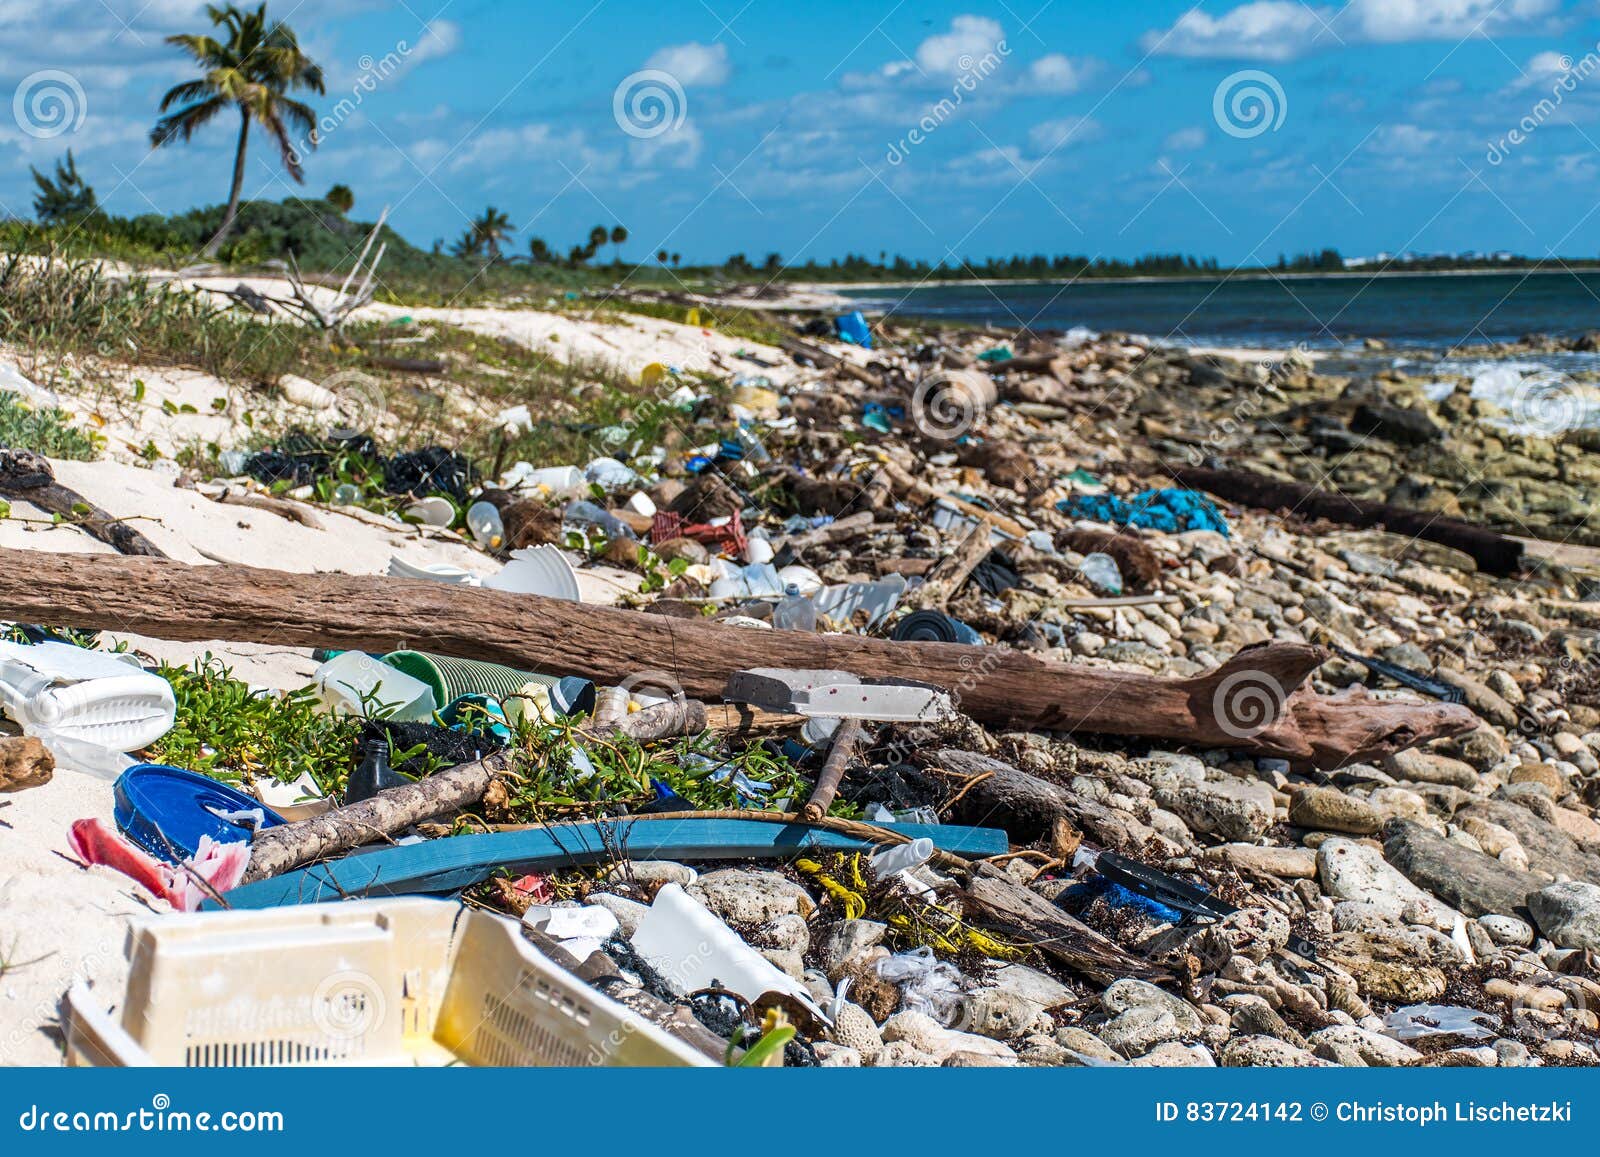 mexico ocean pollution problem plastic litter